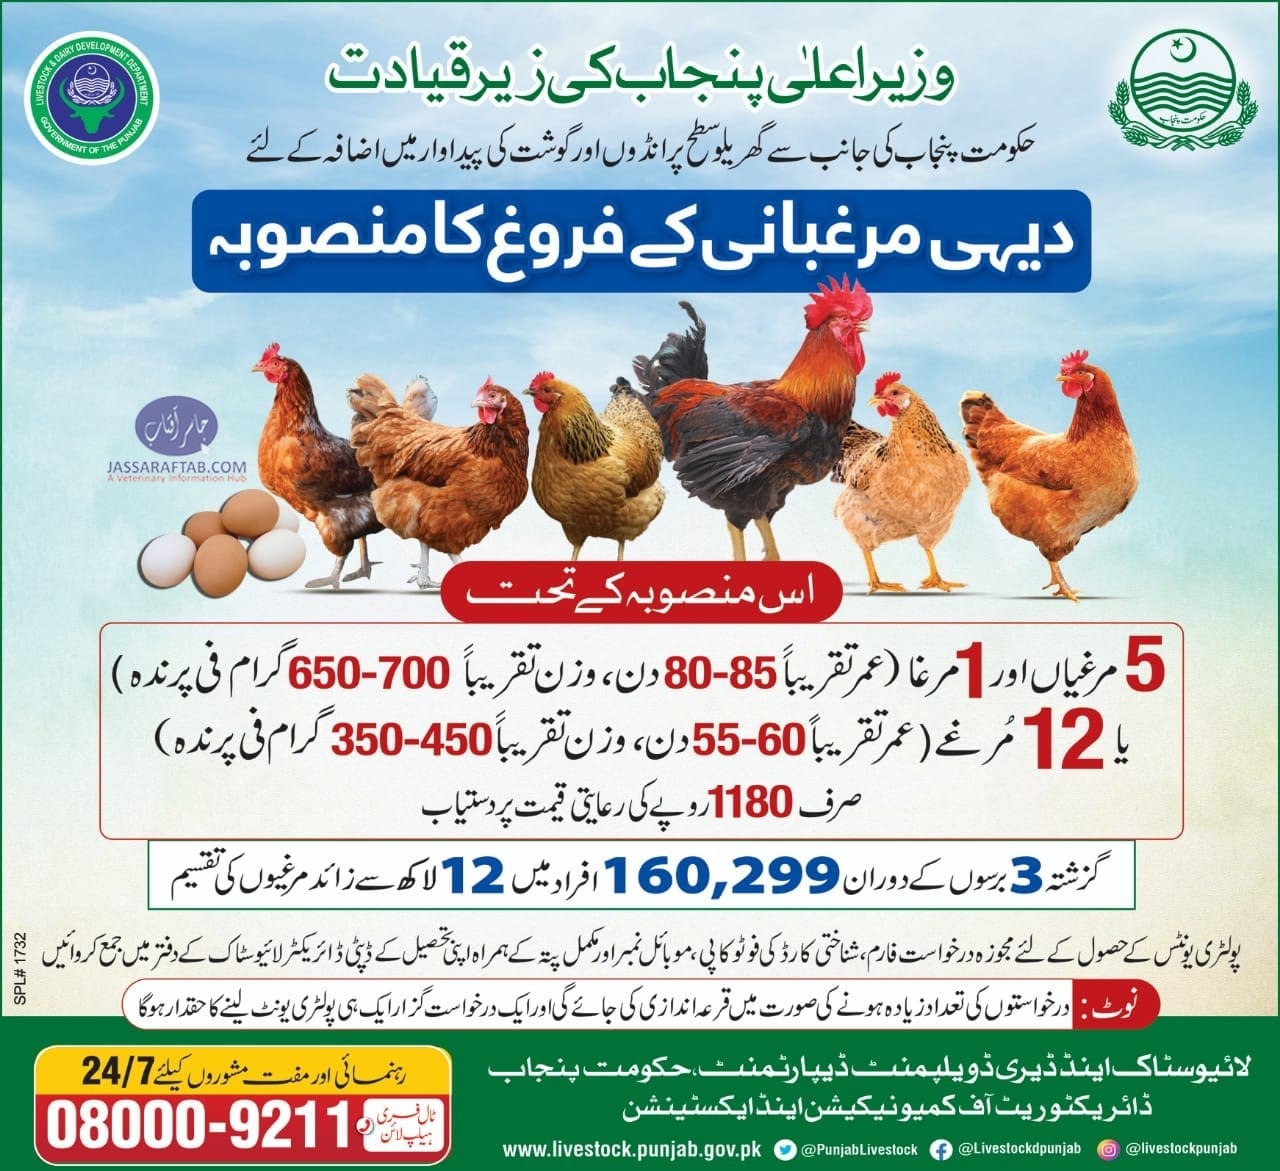 Poultry units